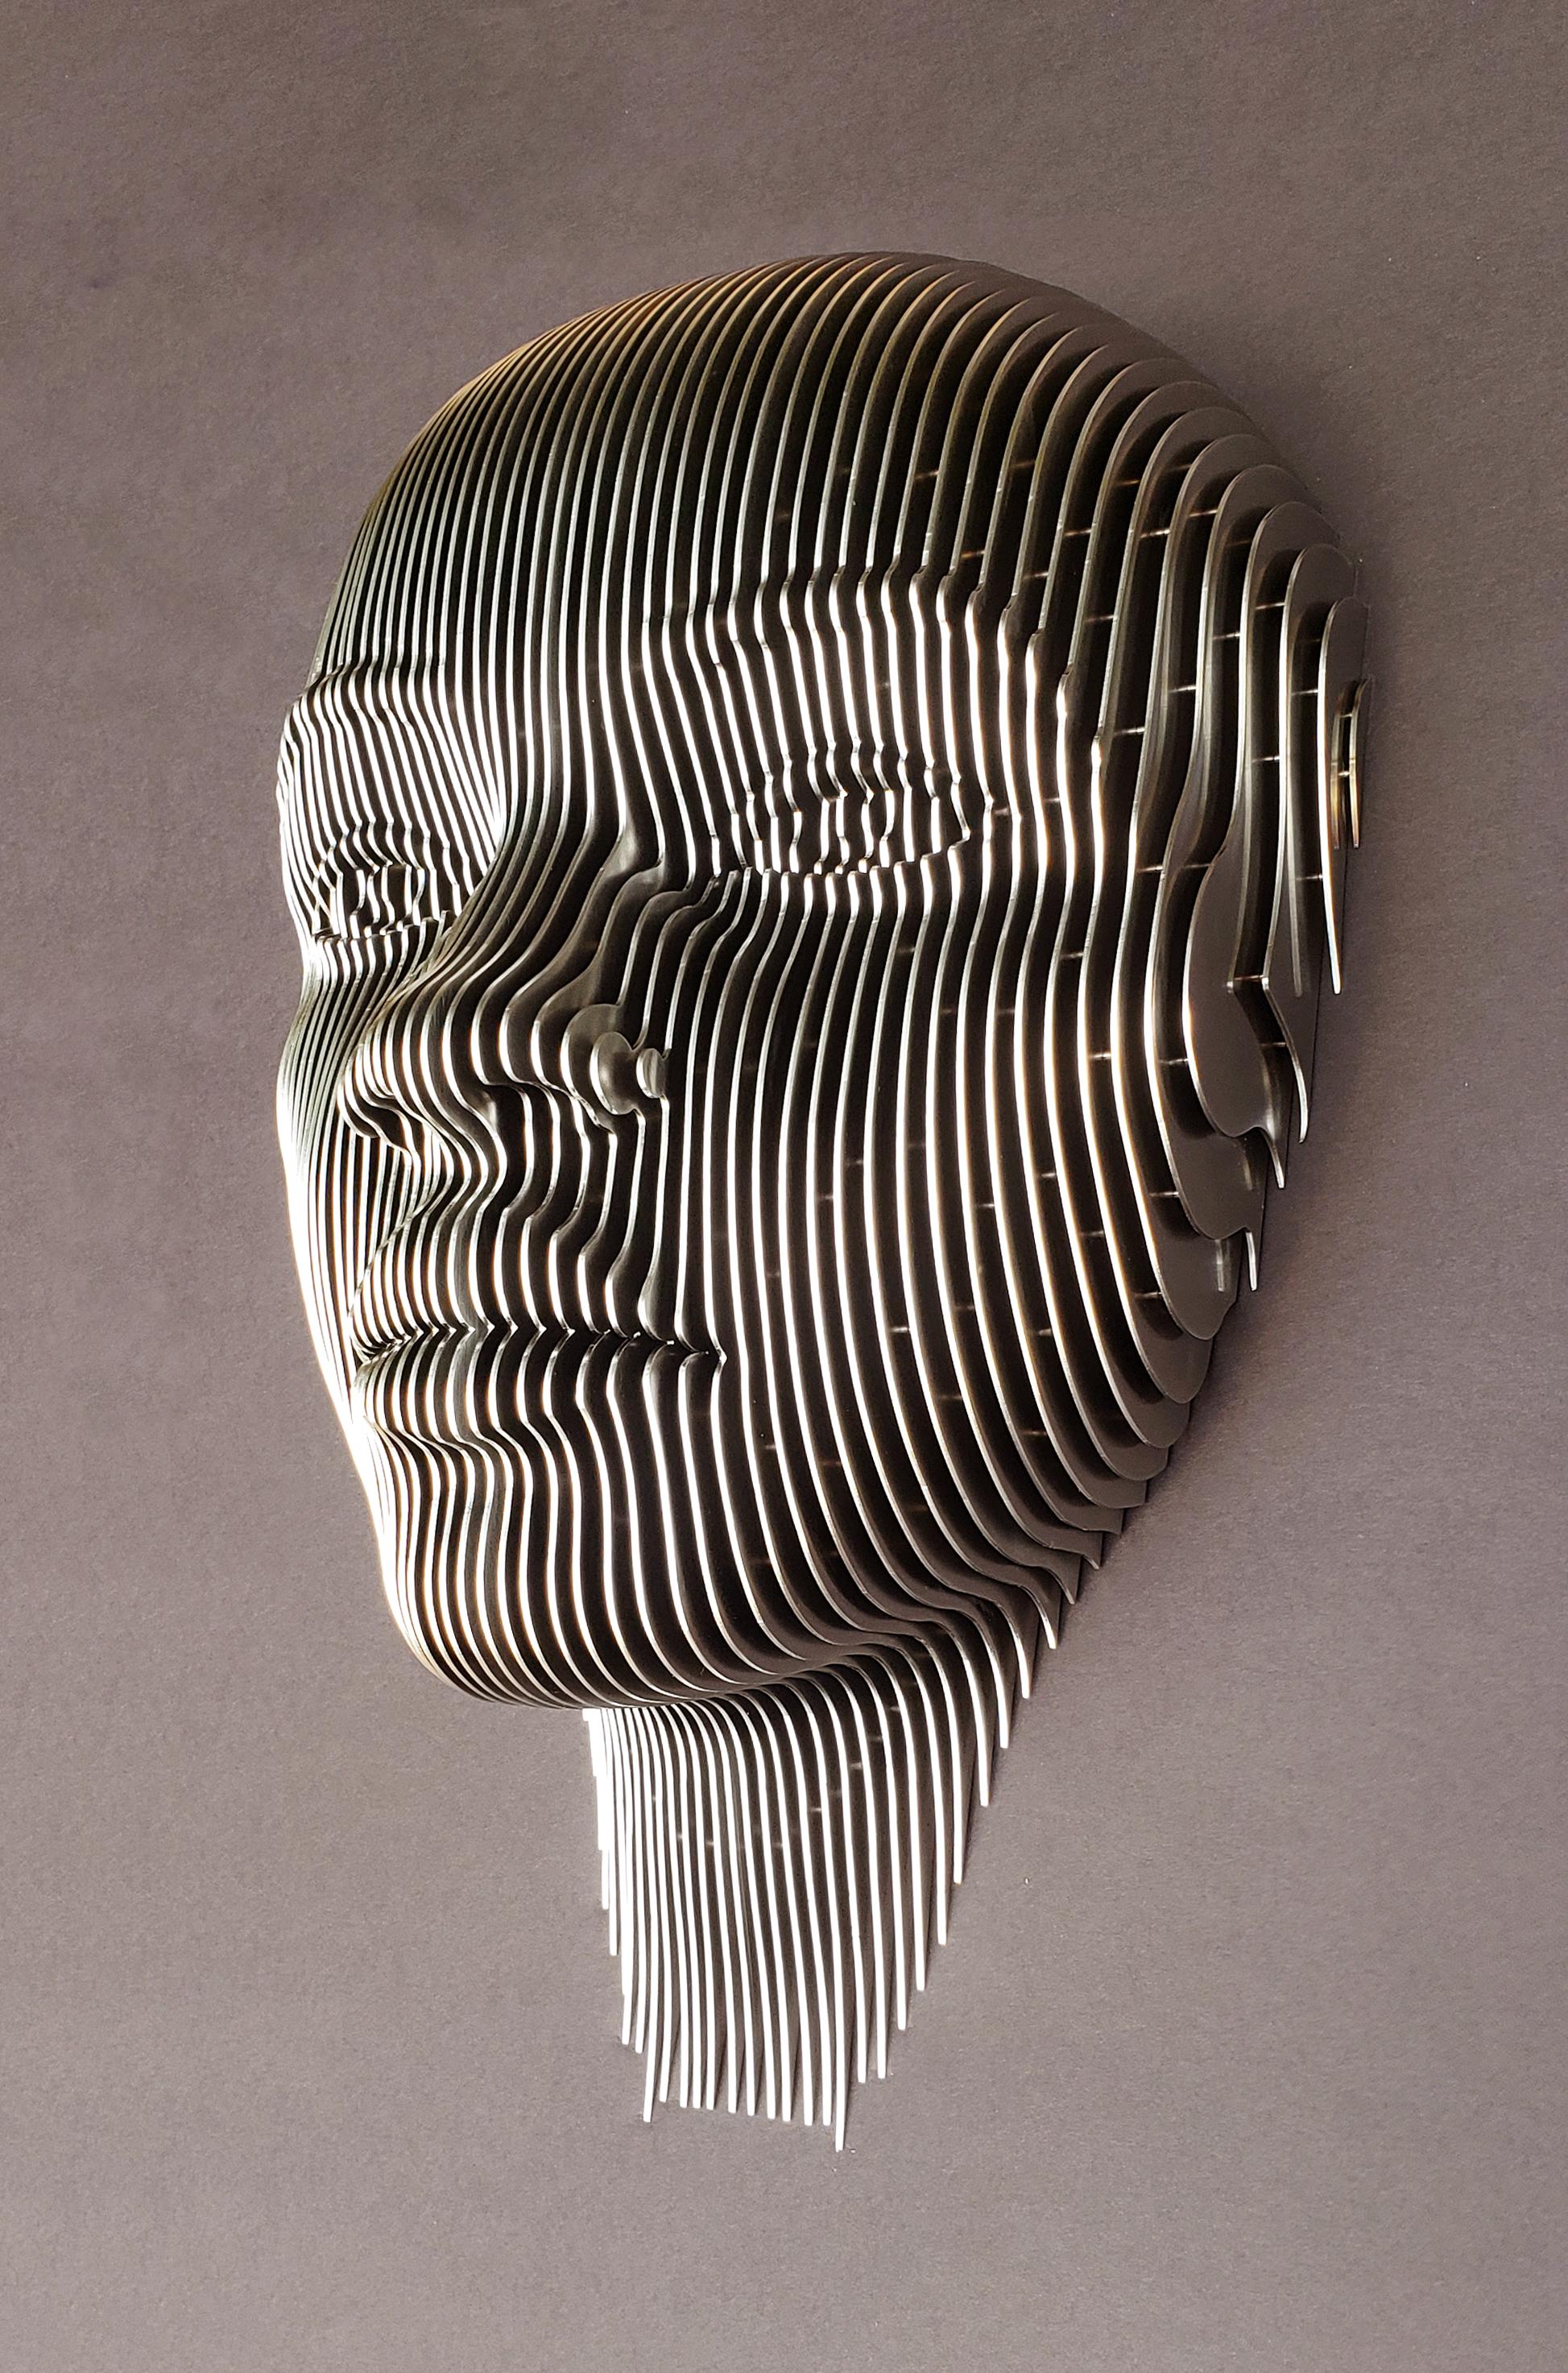 Lyle London Figurative Sculpture - BEAUTY